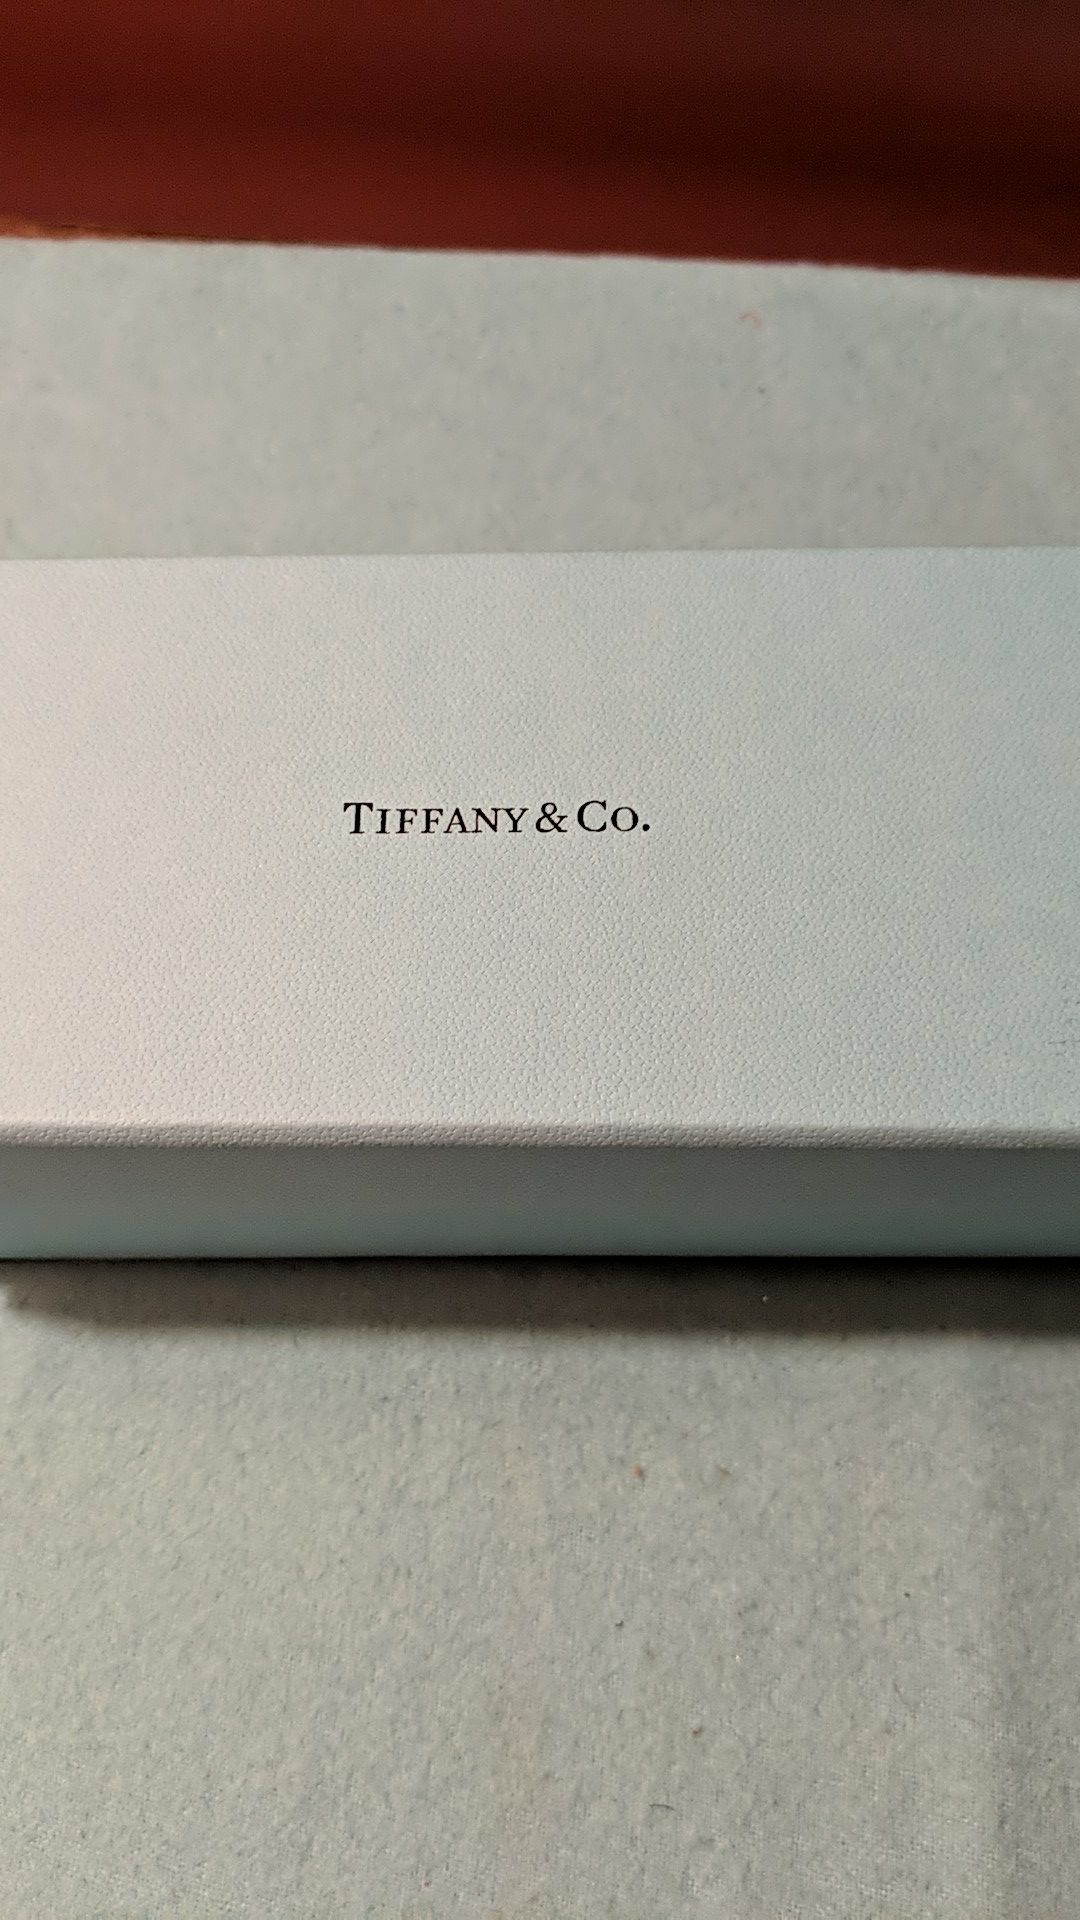 Authentic Tiffany & Co Glasses Box